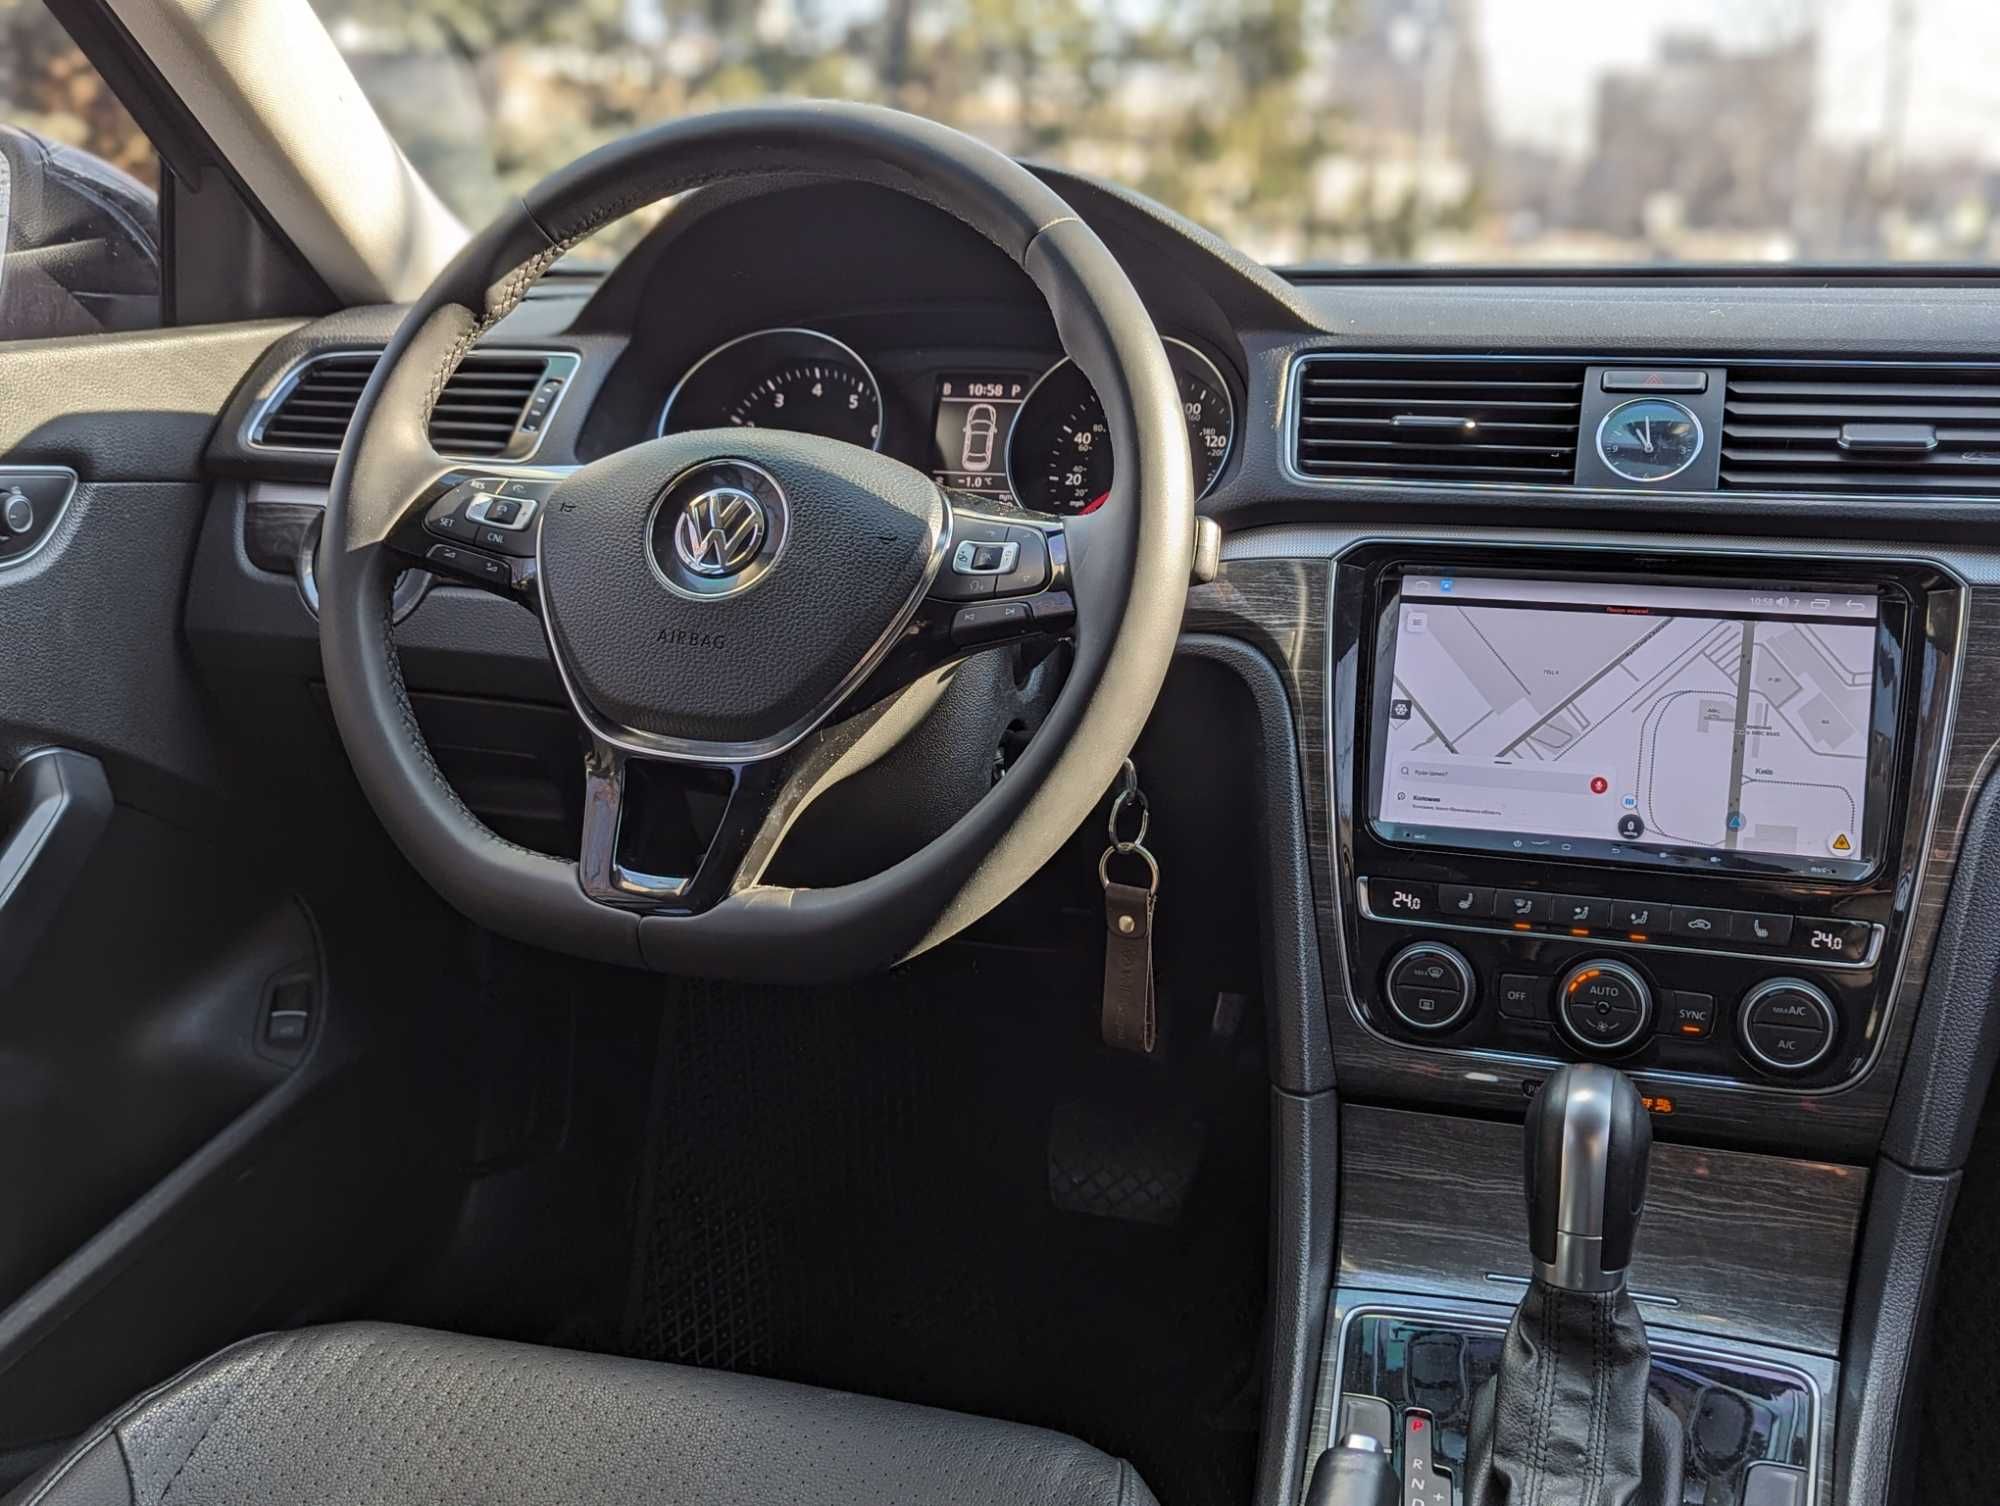 Volkswagen Passat 2016 у кредит, розстрочку, на виплату.